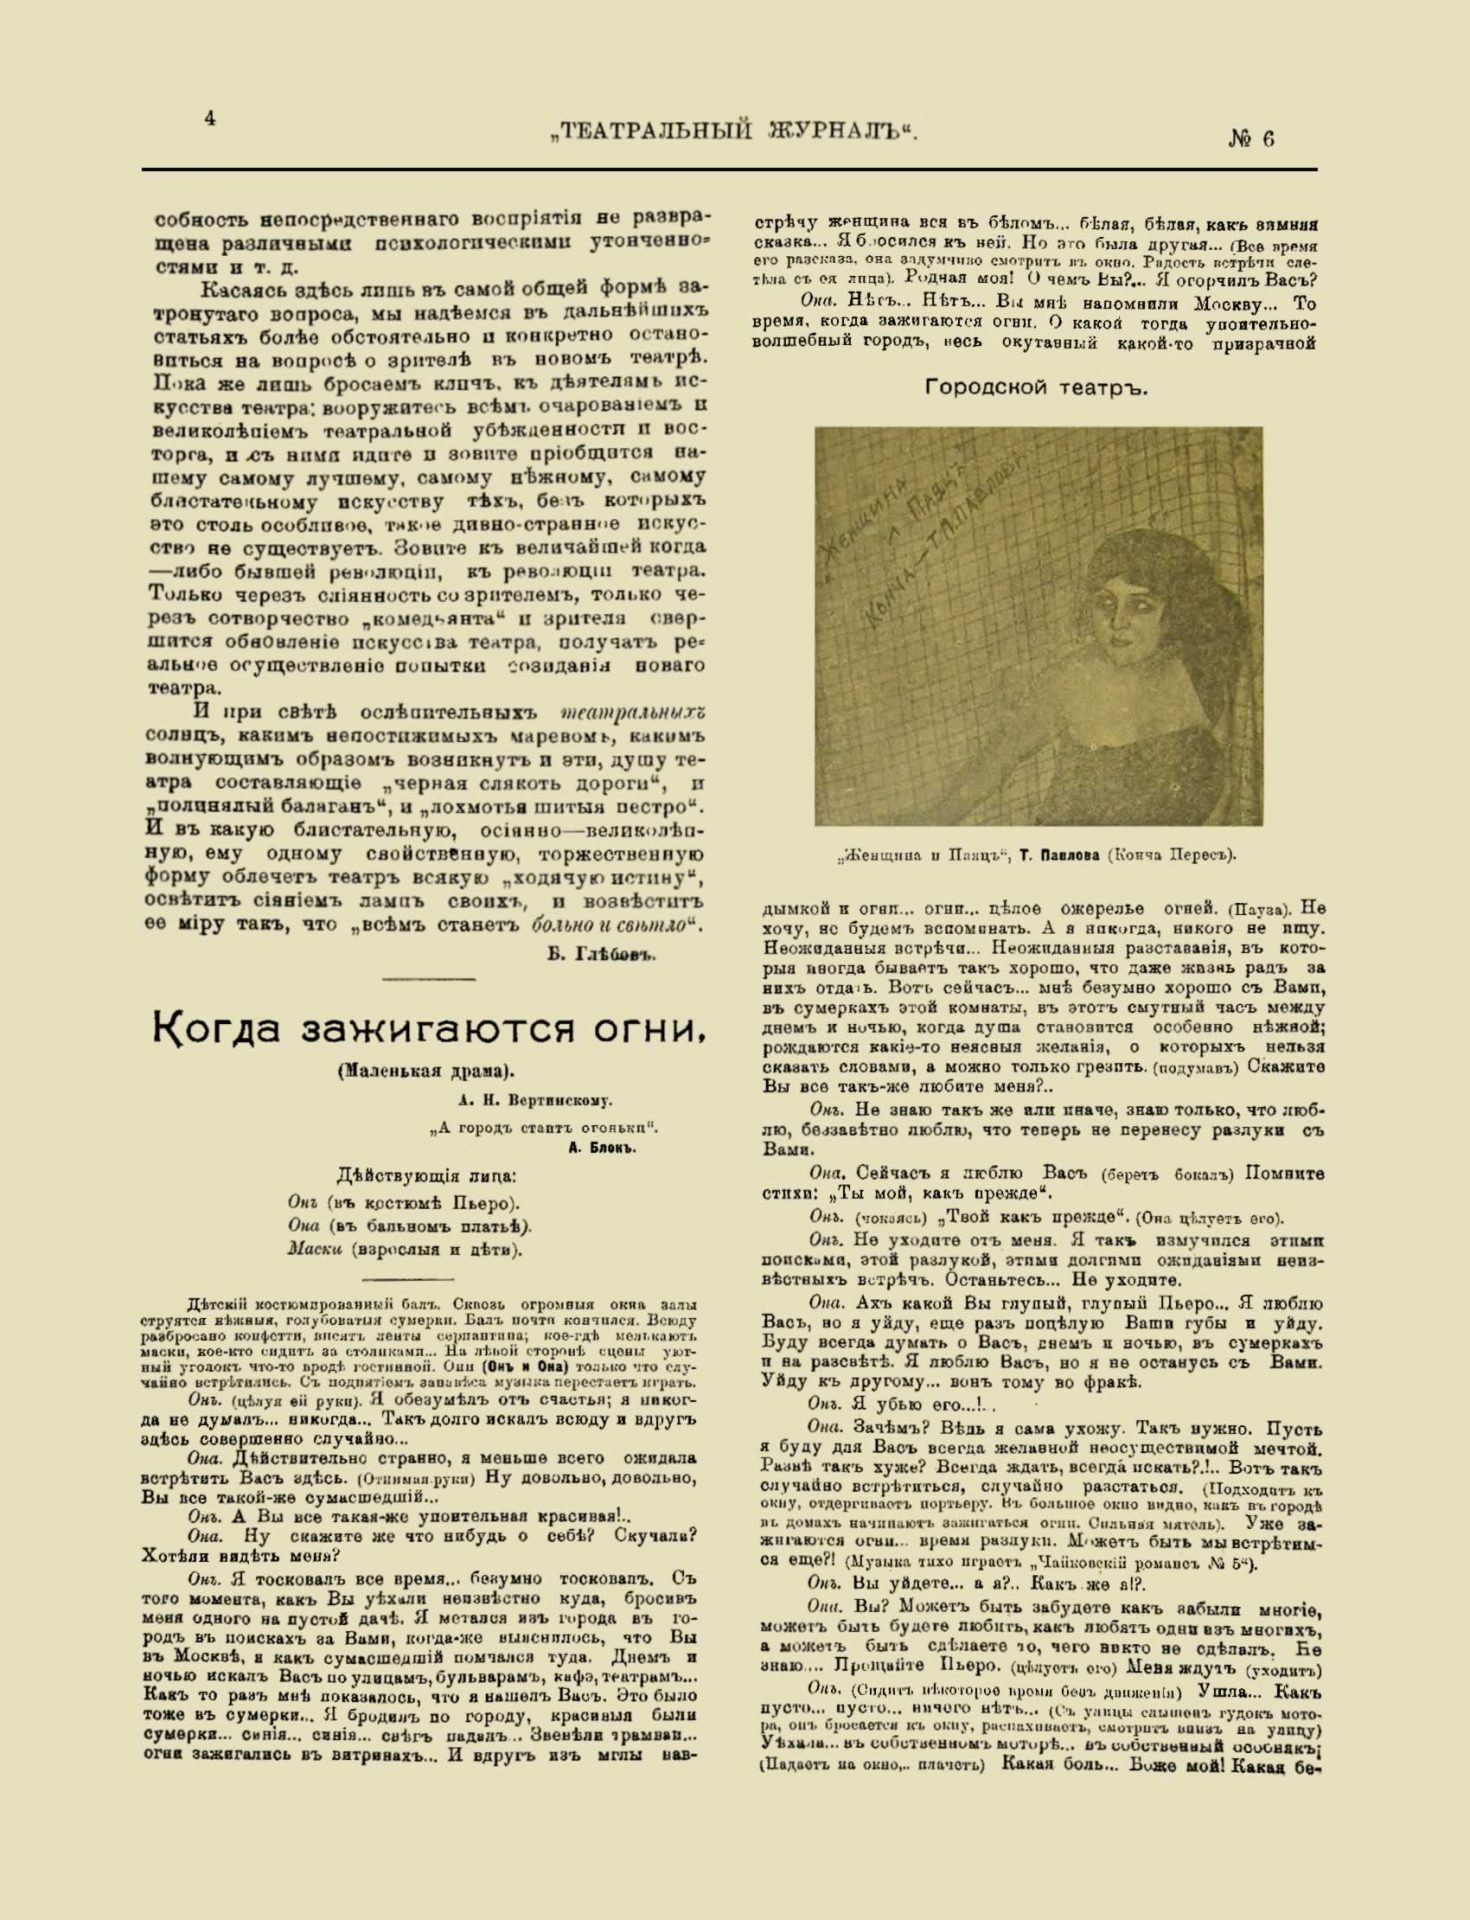 Театральный журнал_1918_№6